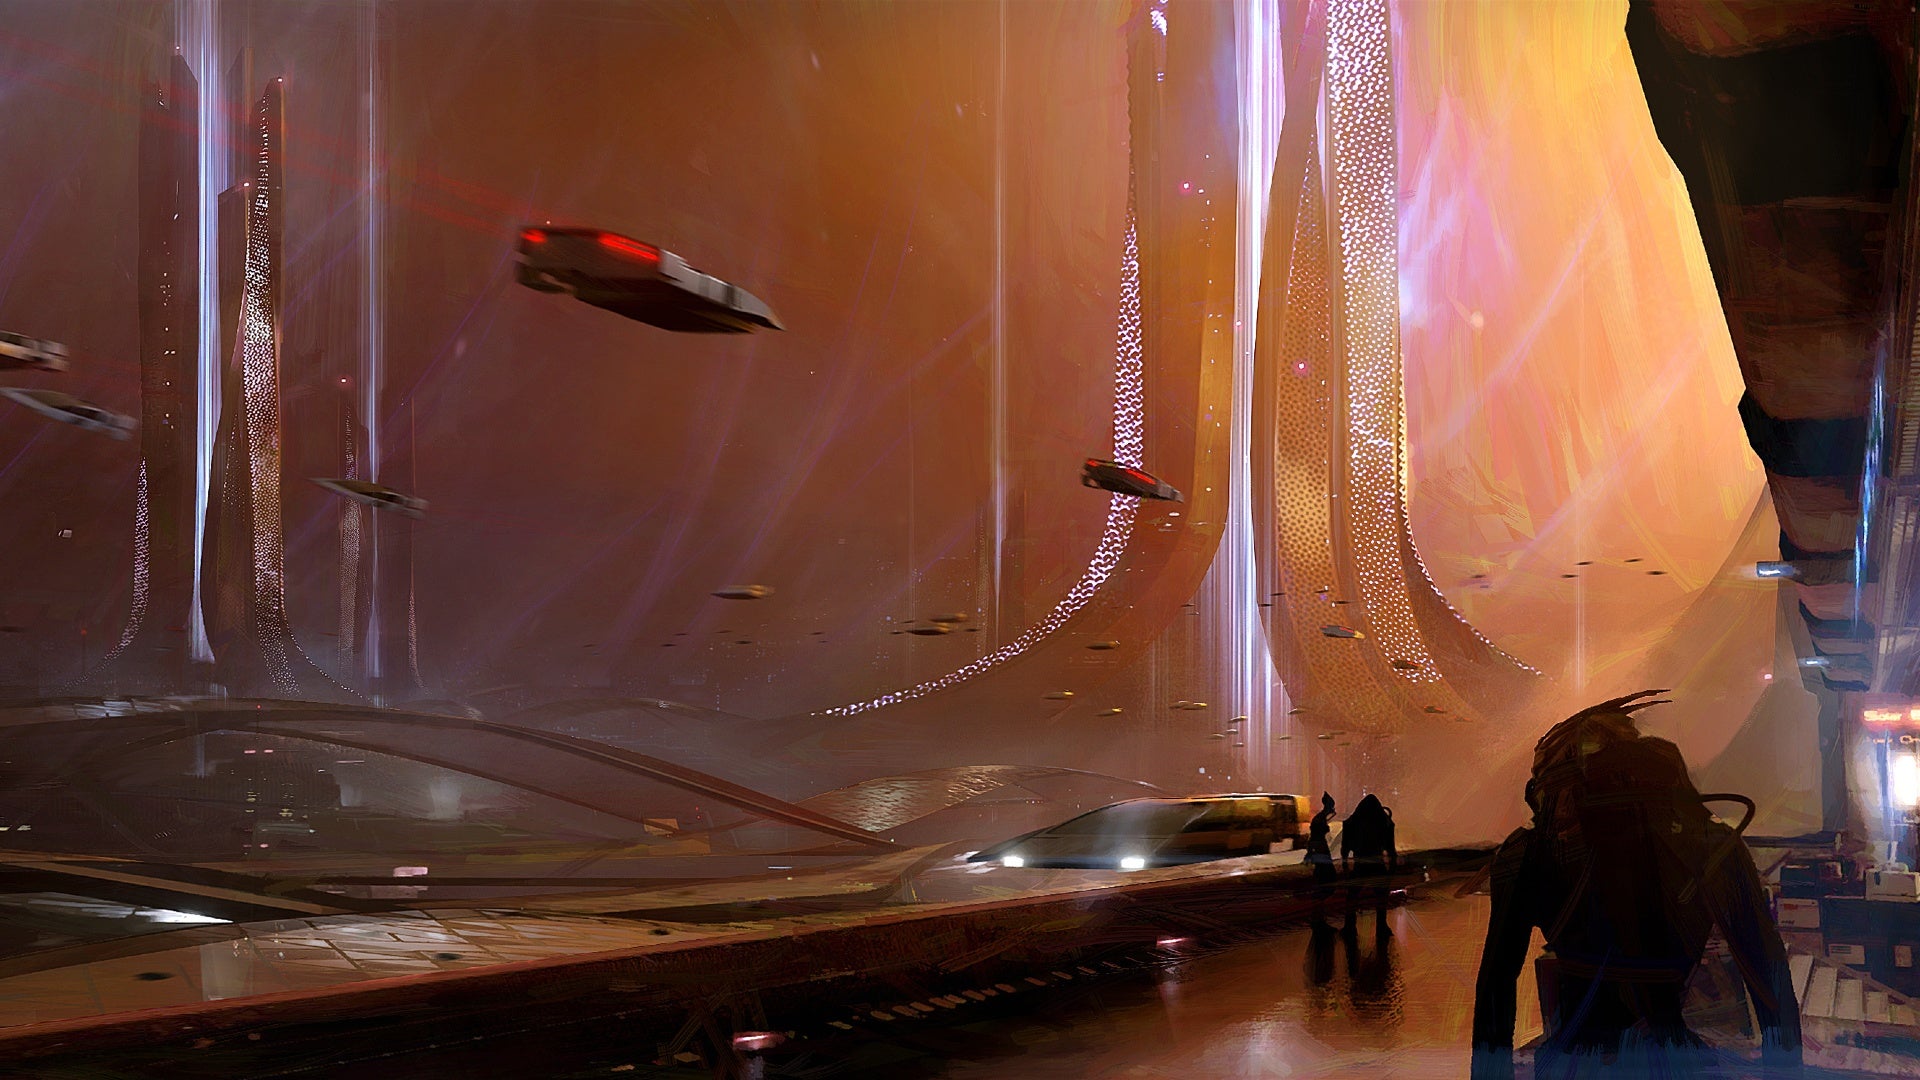 Concept art from the next Mass Effect, Mass Effect 5, showing a turian, krogan, and salarian